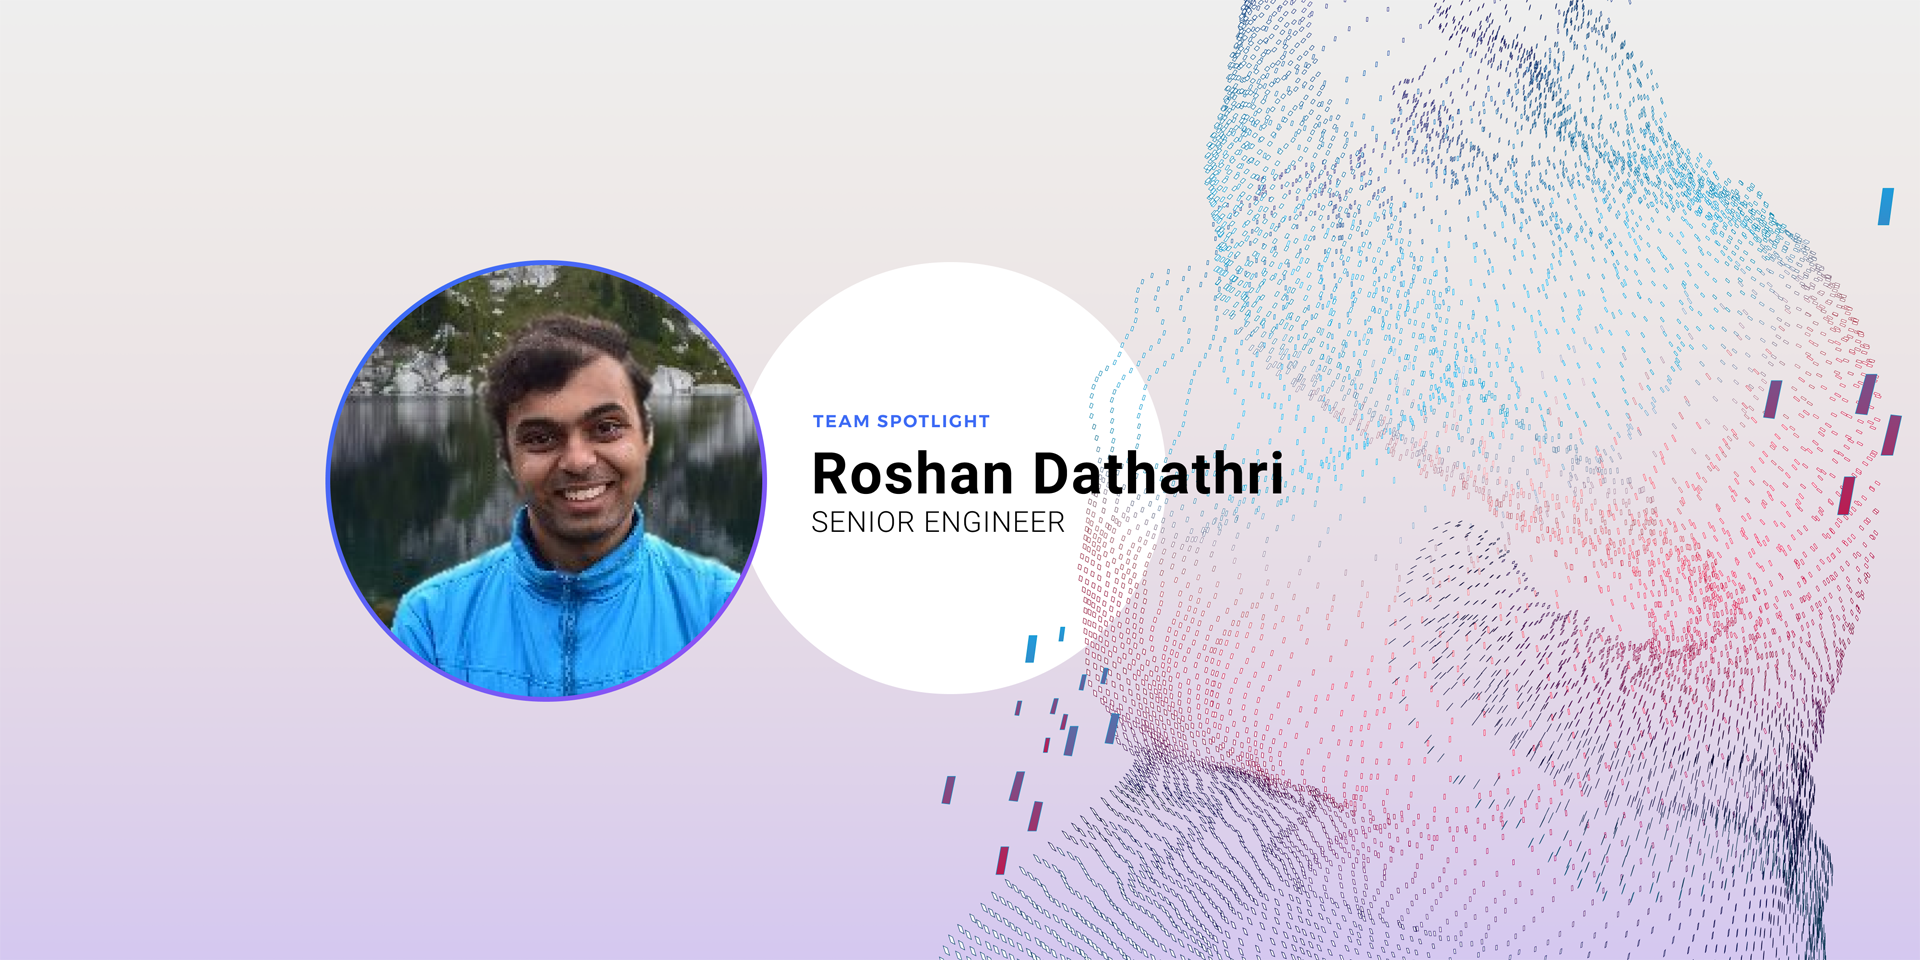 Team Spotlight - Roshan Dathathri